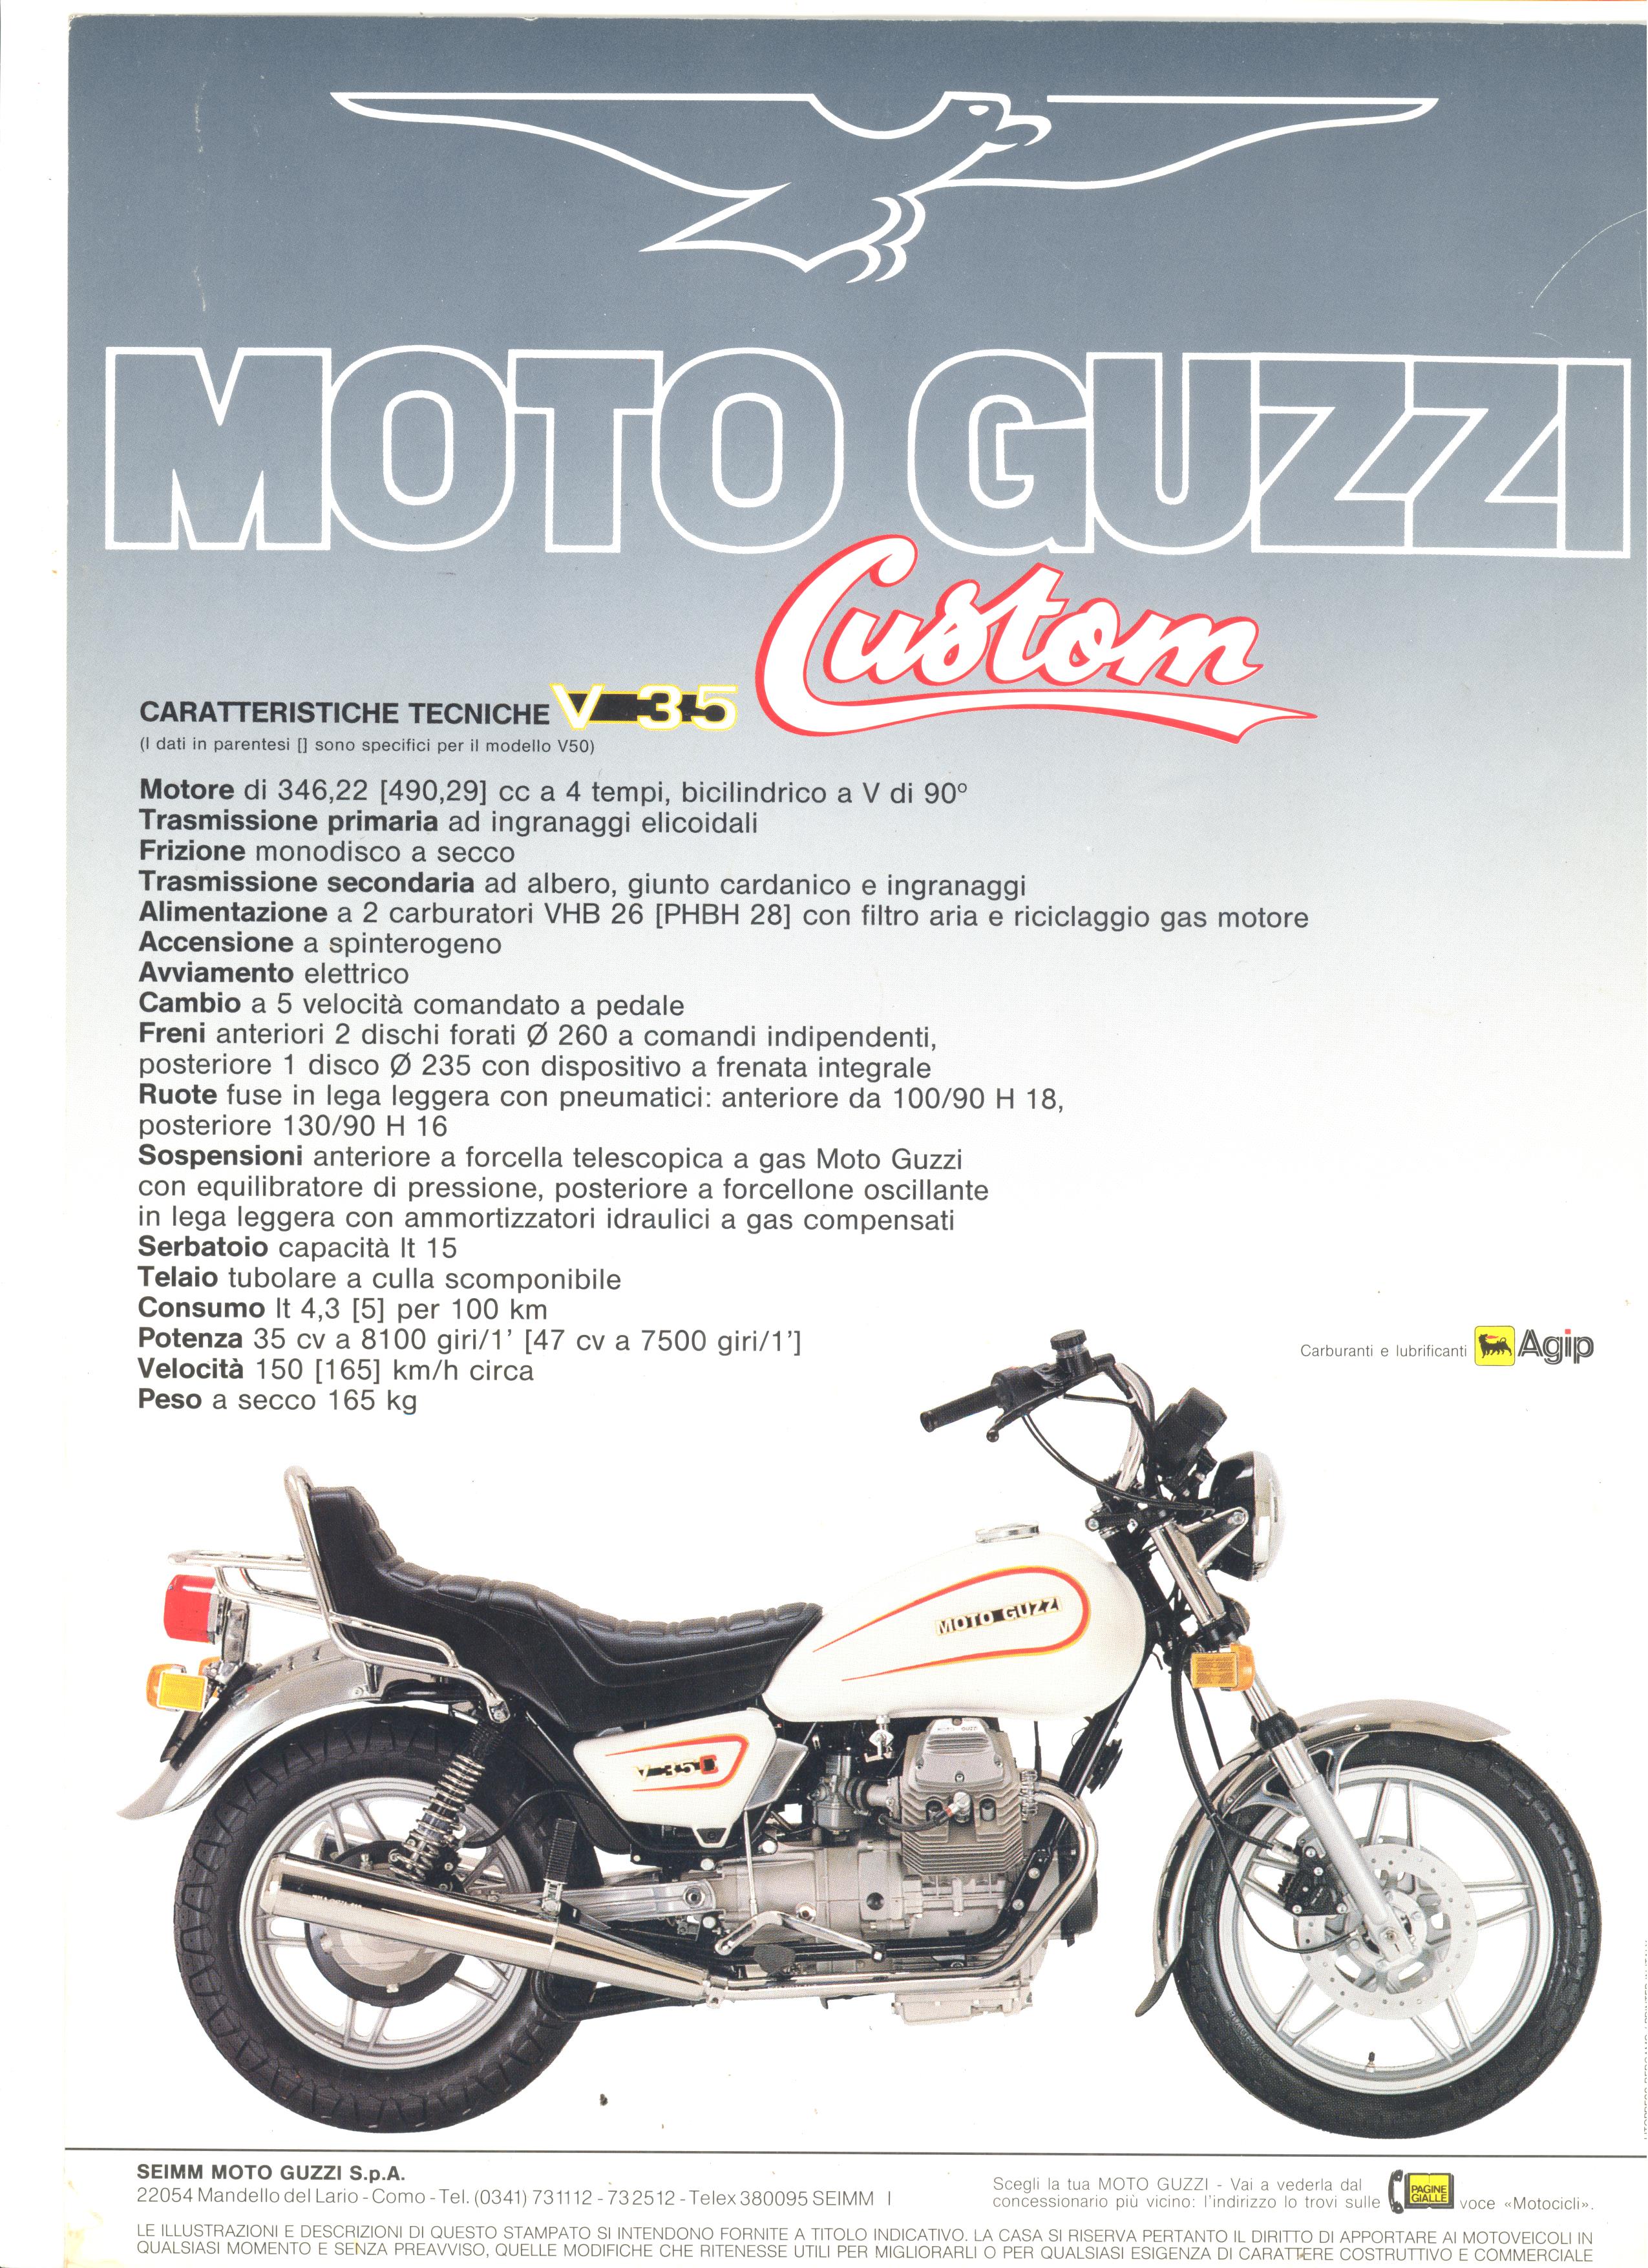 Moto Guzzi factory brochure: V35C - V50C